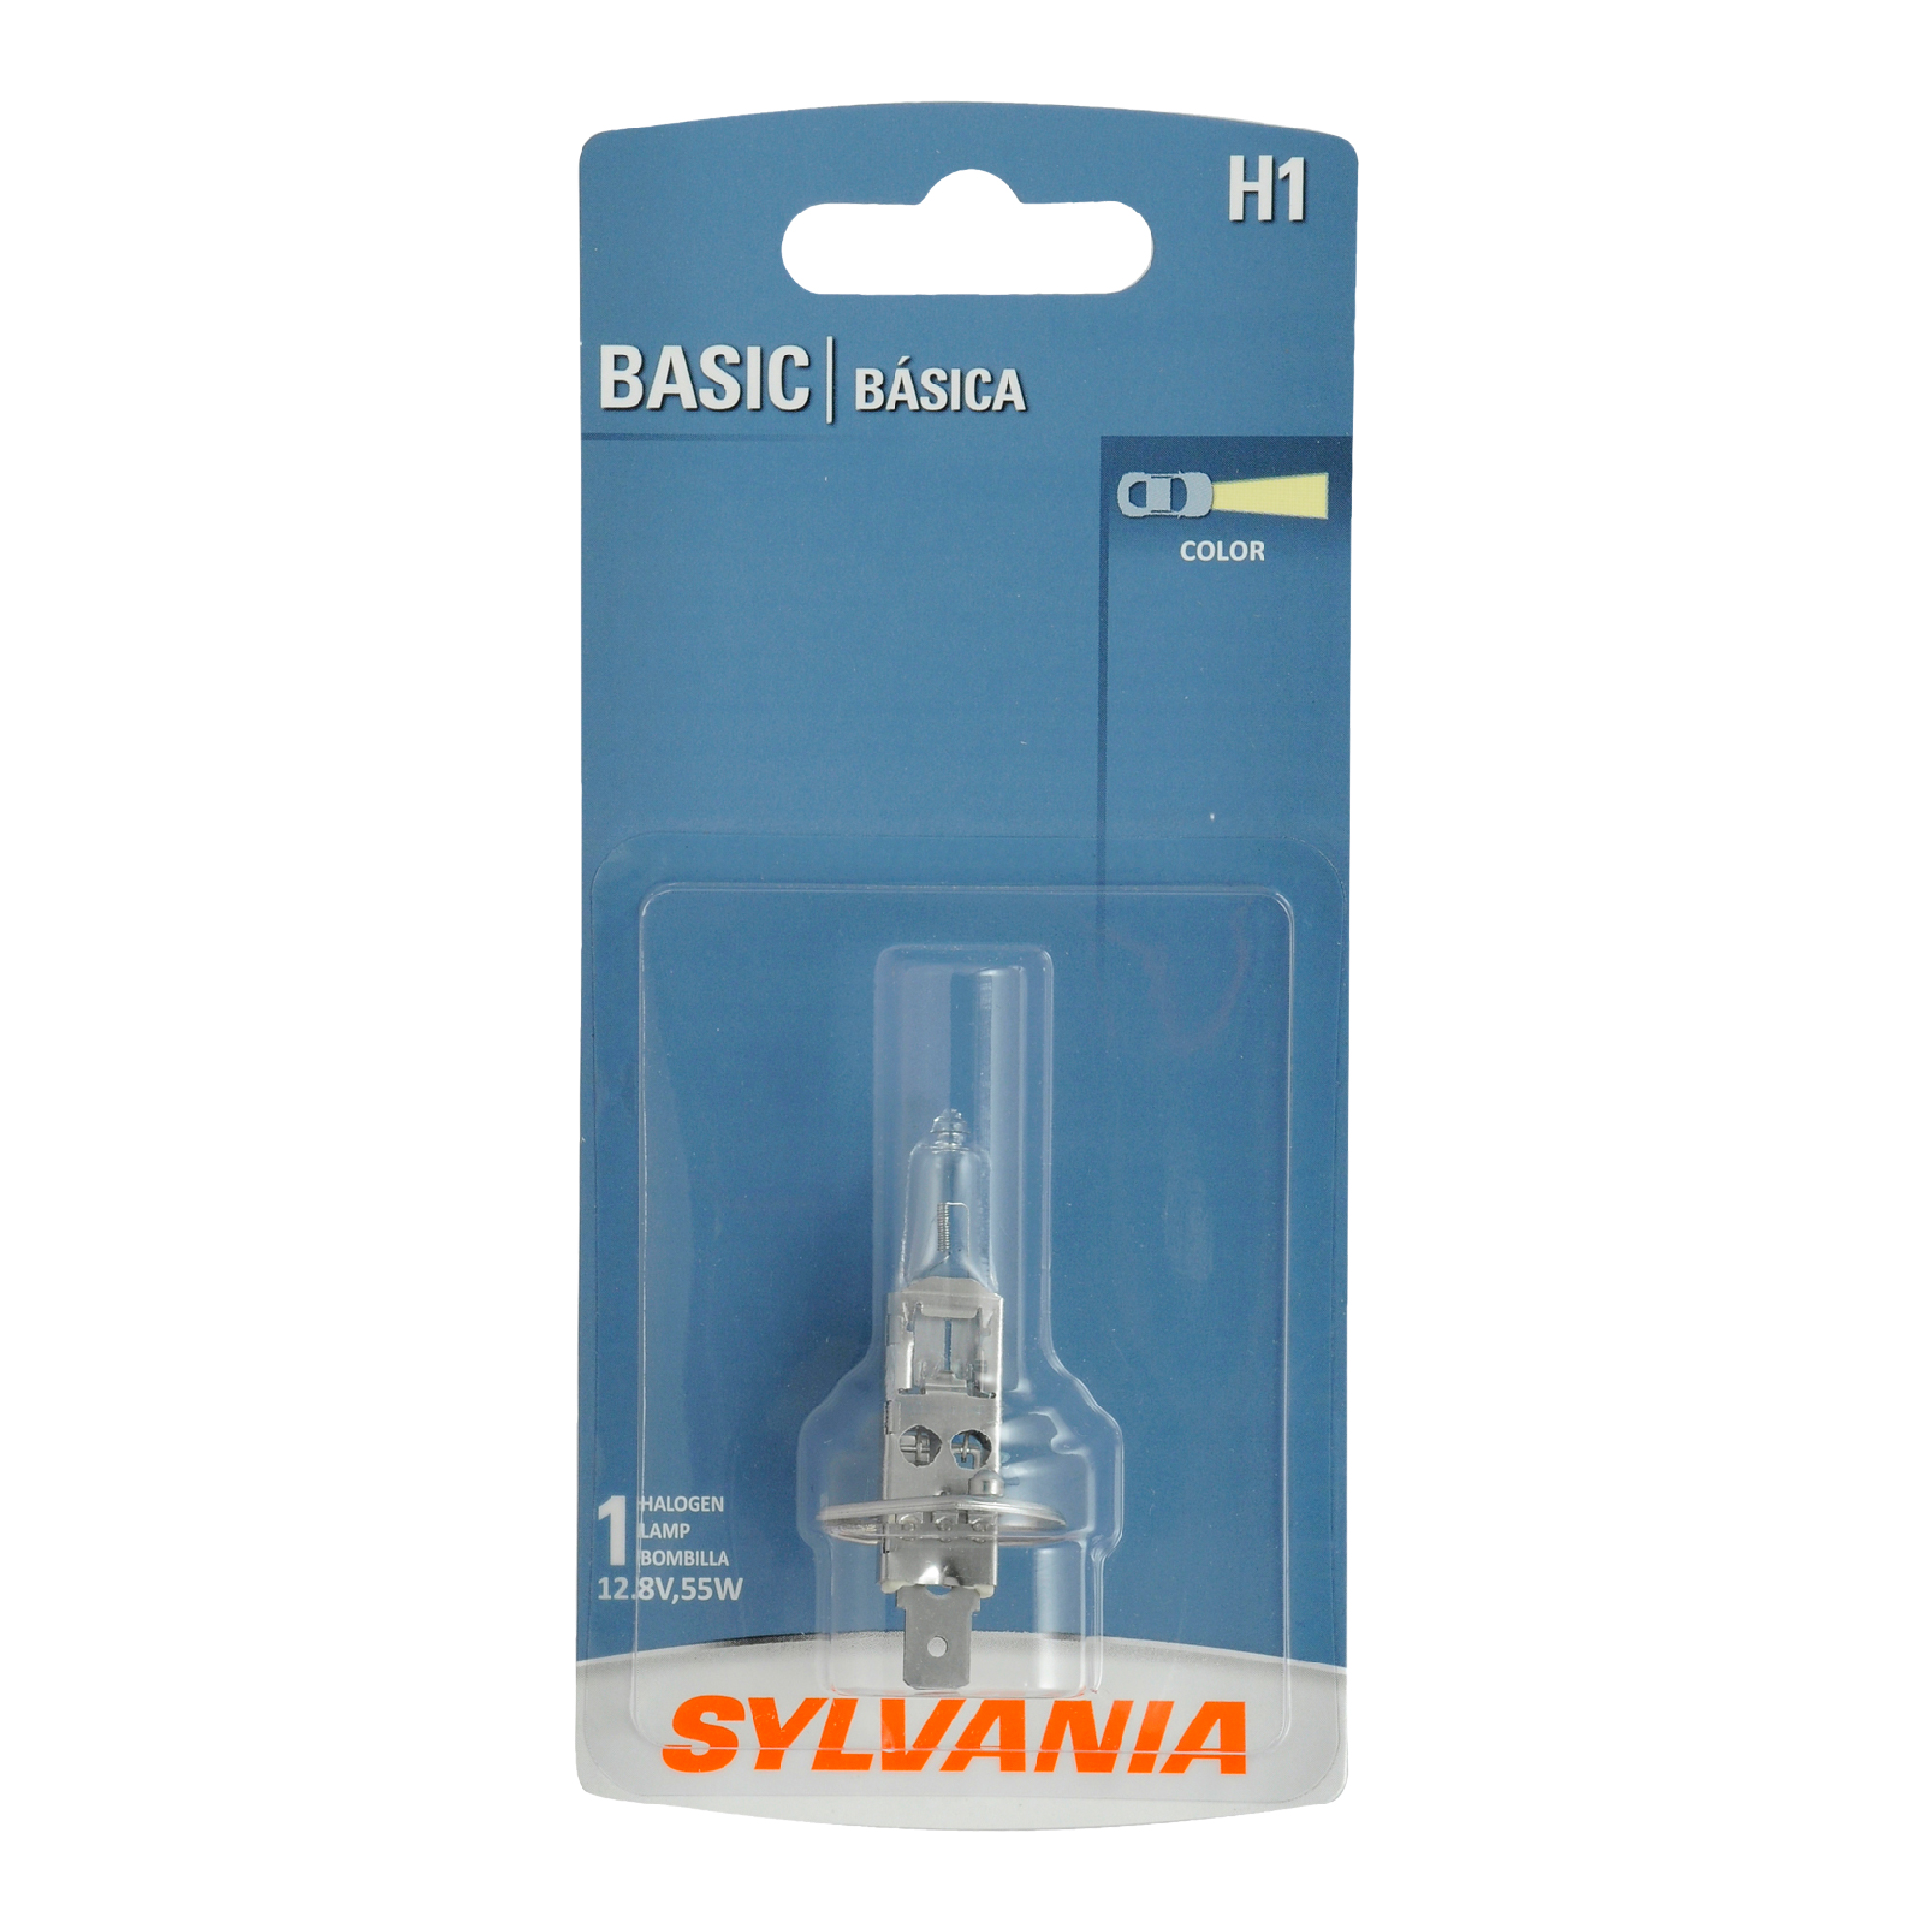 SYLVANIA H1 Basic Halogen Headlight Bulb, 1 Pack